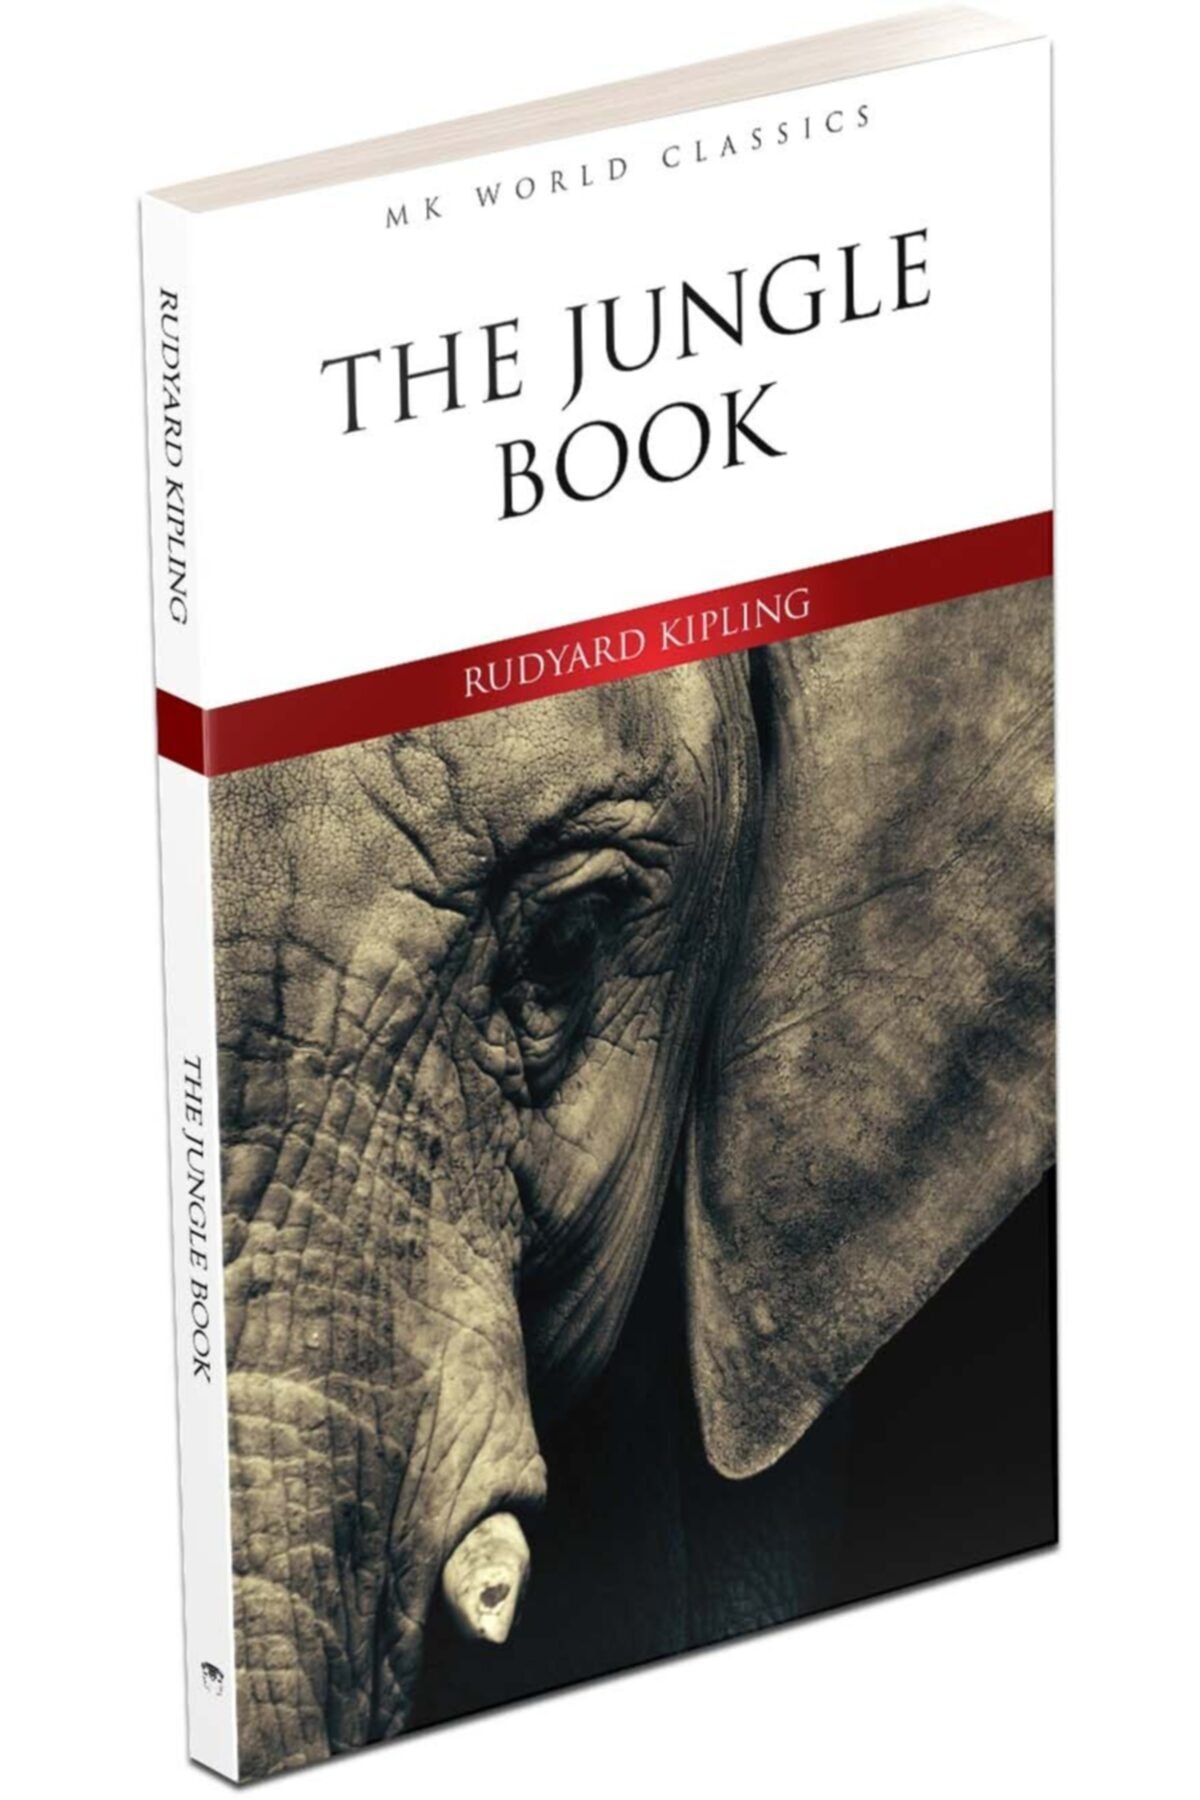 MK Publications Ingilizce Klasik Roman – The Jungle Book - Rudyard Kipling -